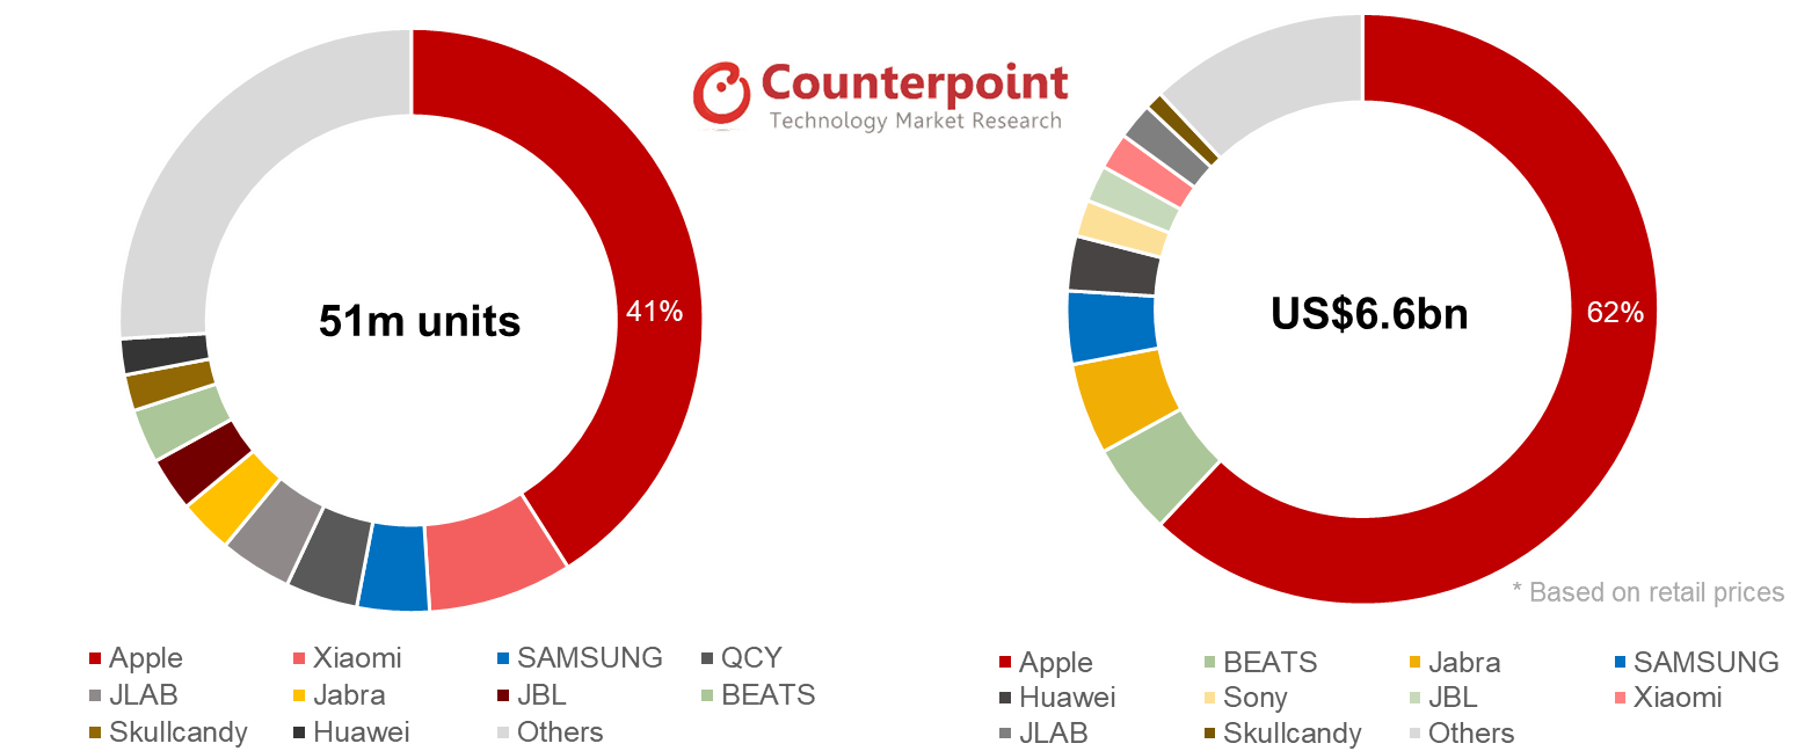 Counterpoint真无线耳机按品牌划分的市场份额- 2019年第四季度